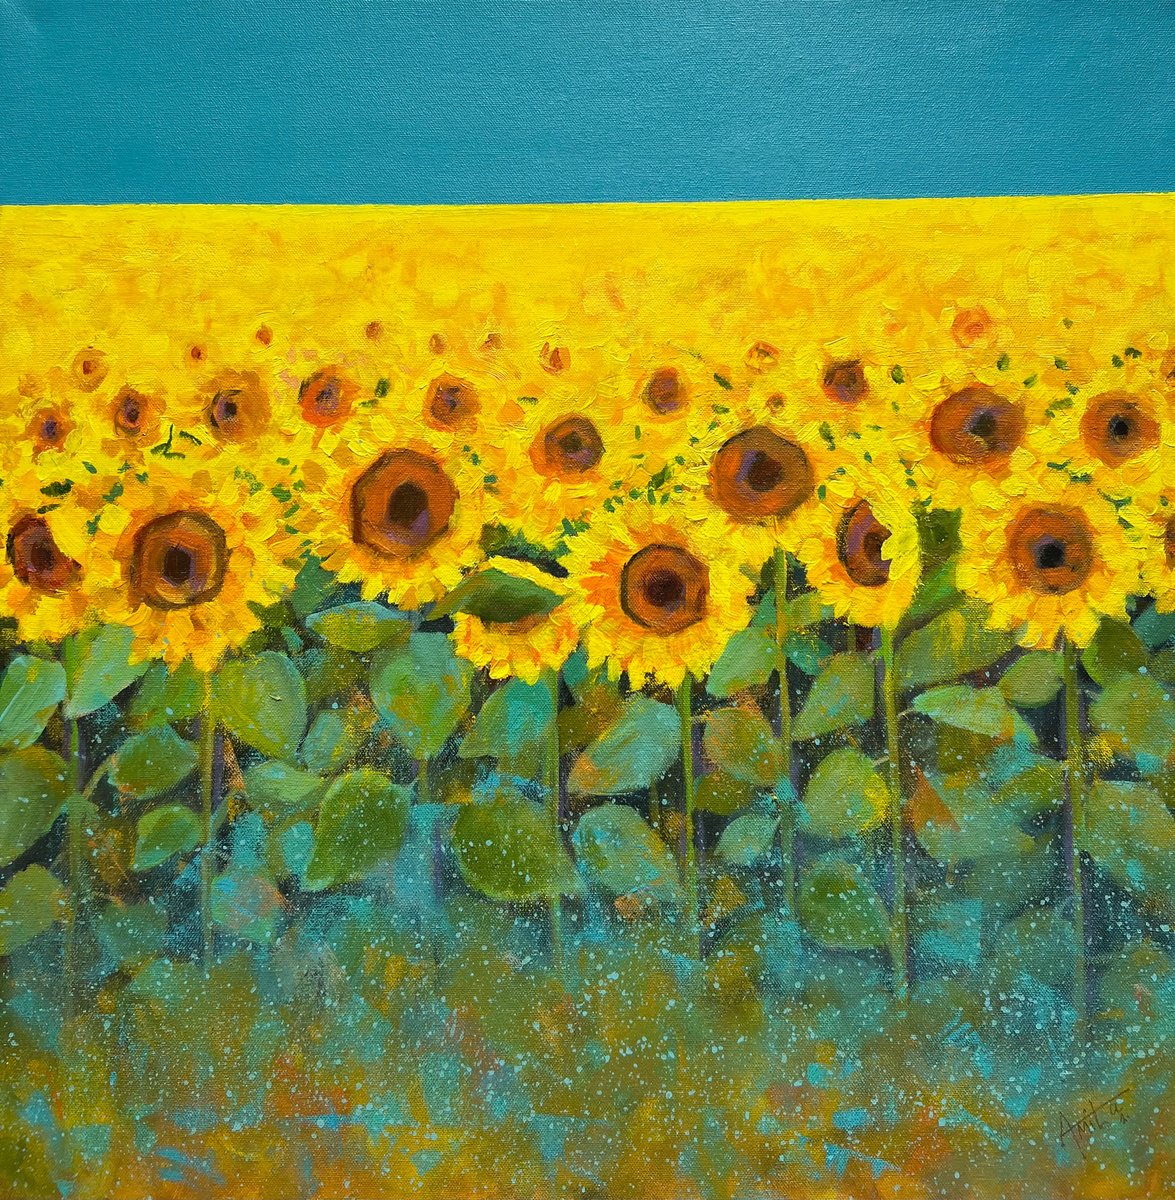 Sea of Sunflowers by Amita Dand